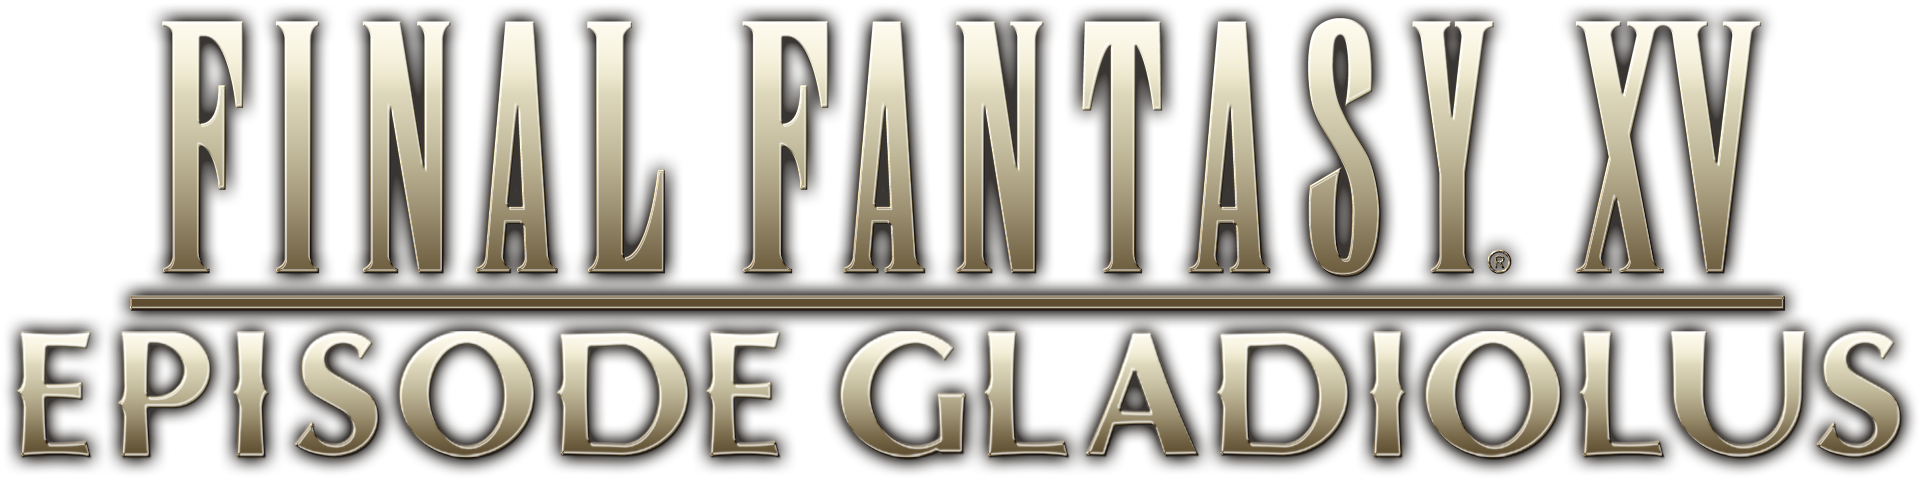 Fantasy Picture Final Logo Download Free Image PNG Image